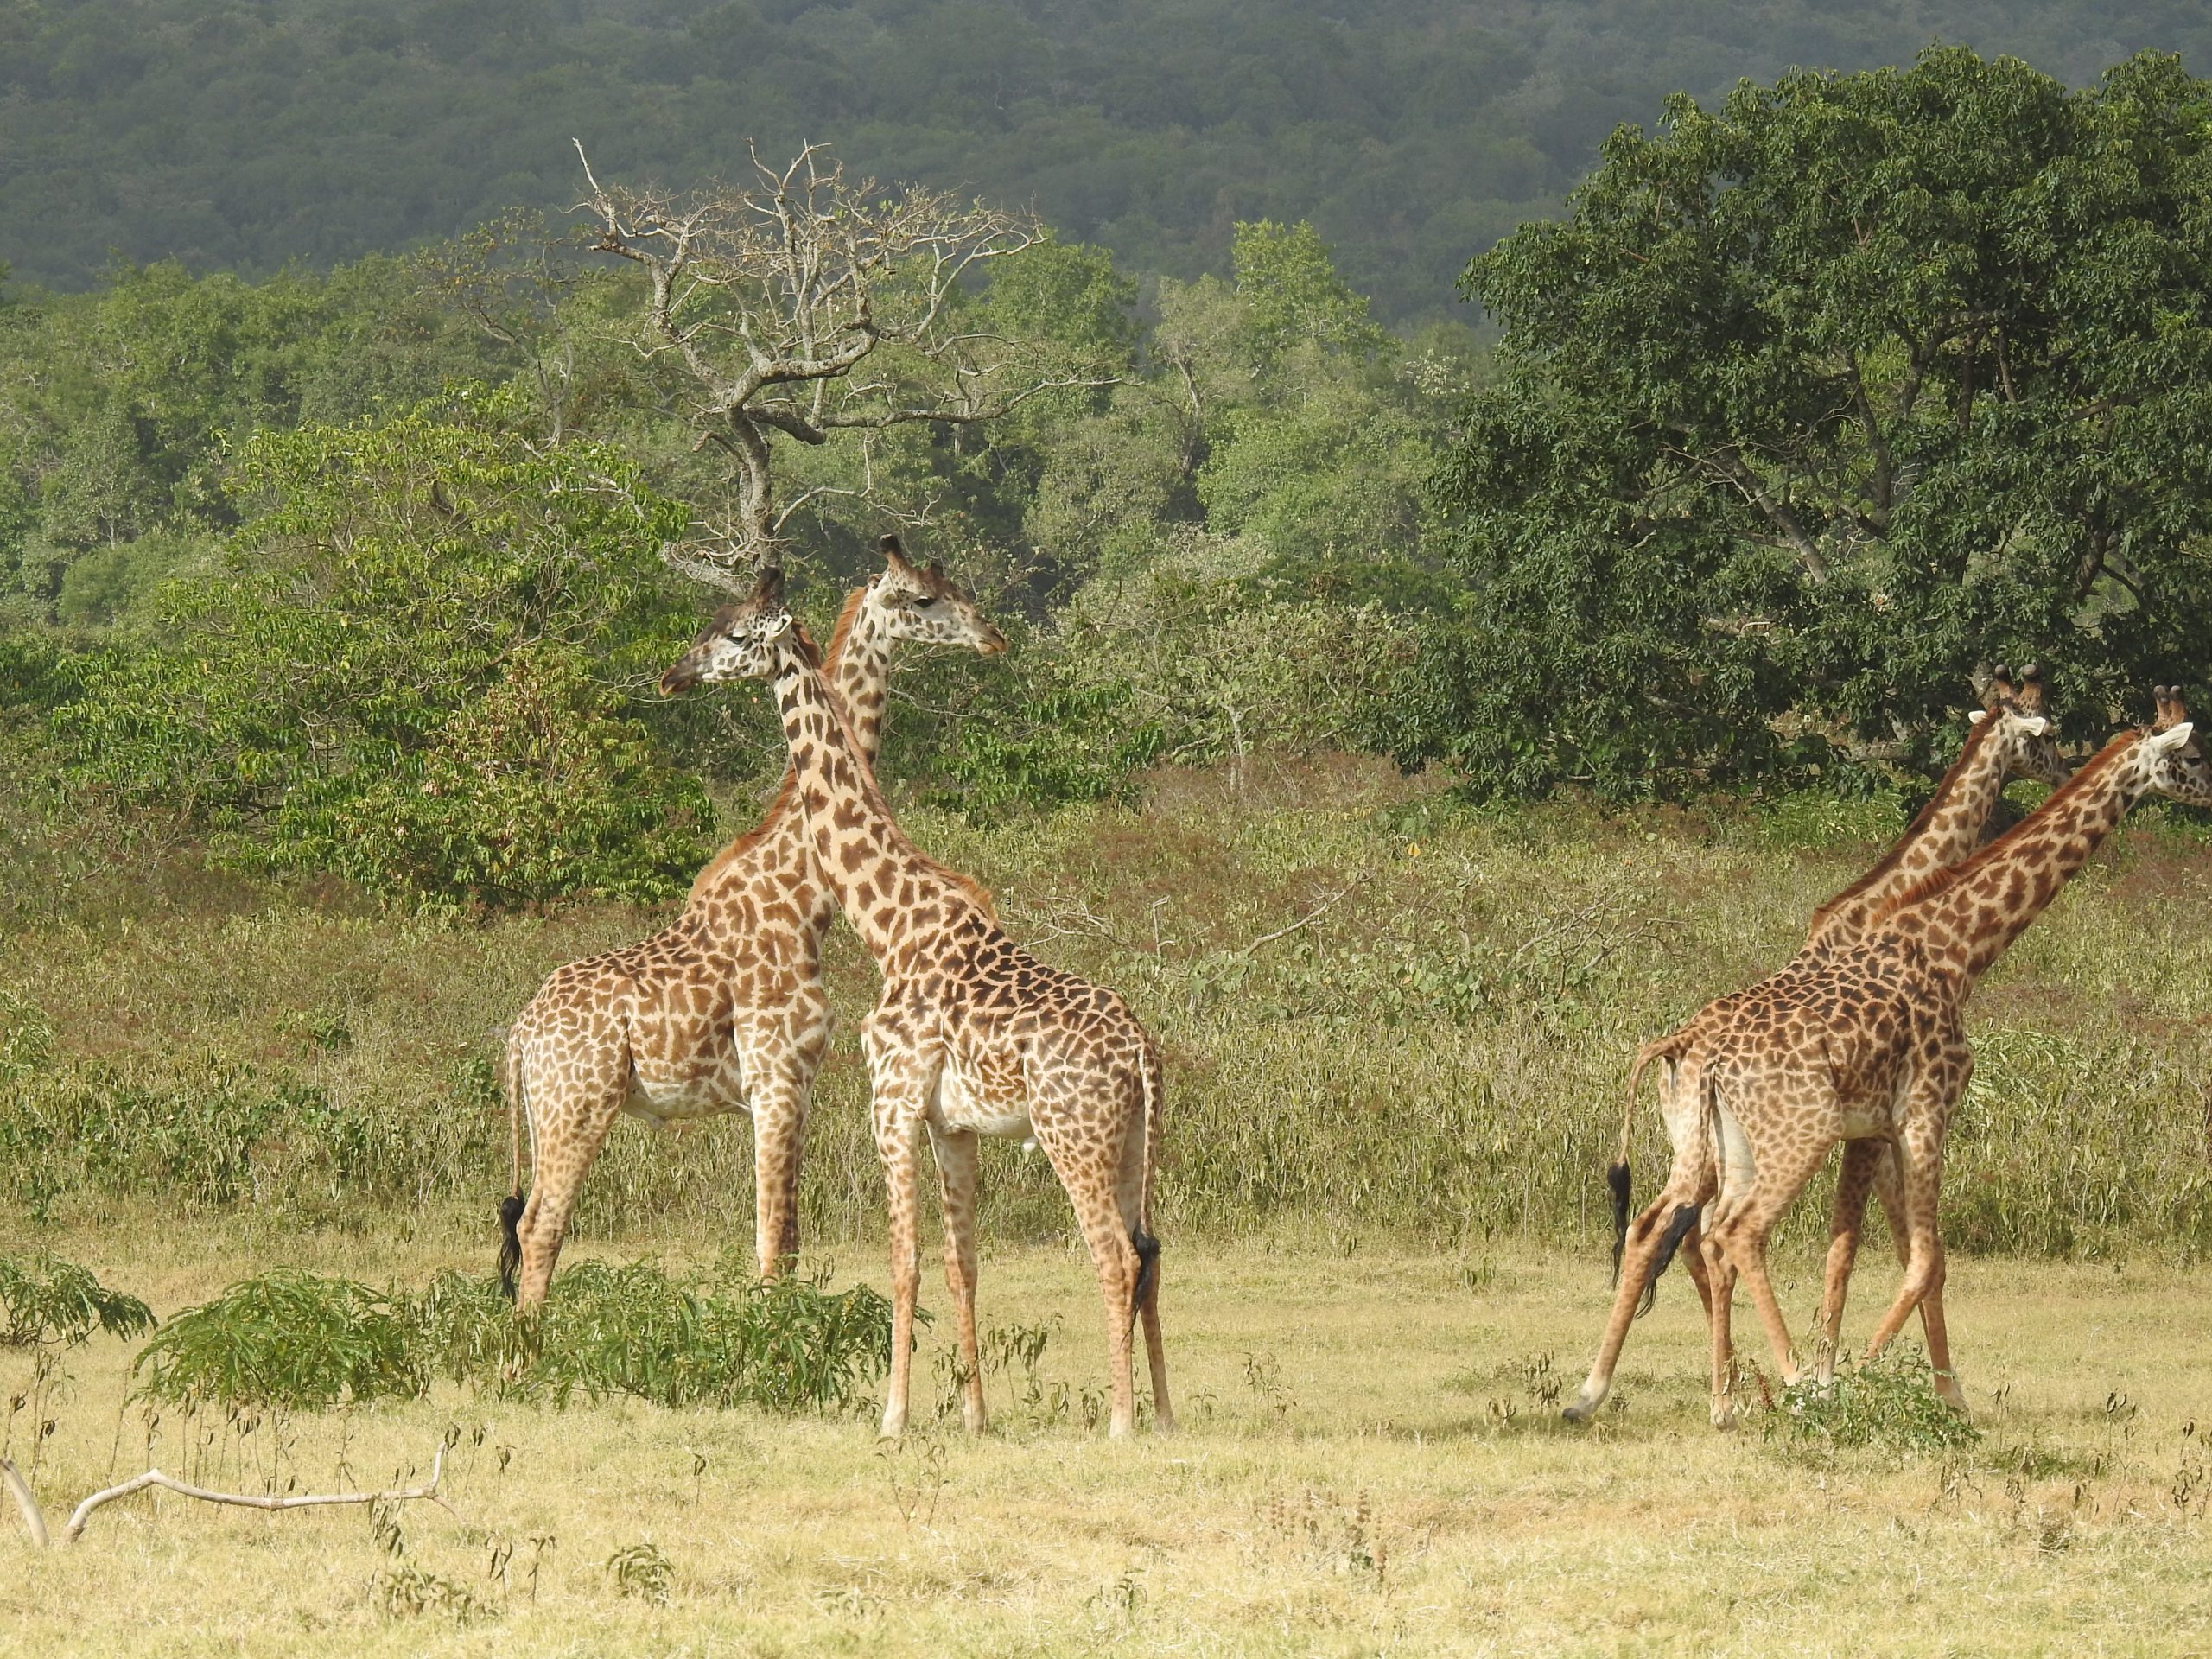 Arusha giraffe